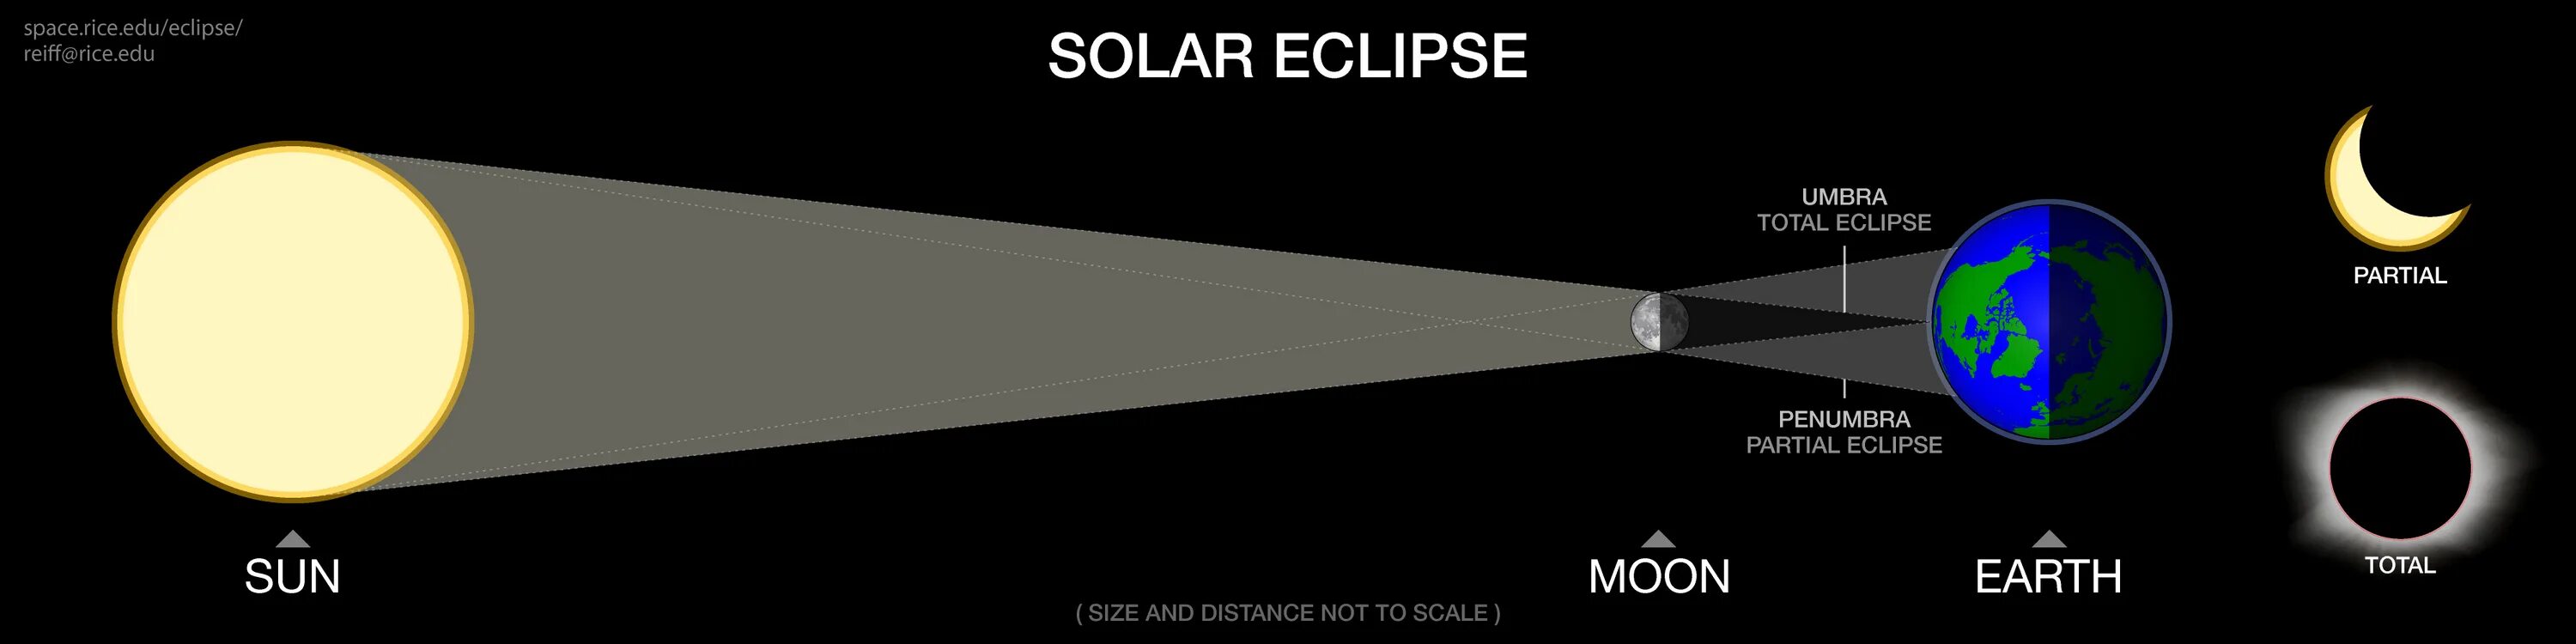 Solar Eclipse and Lunar Eclipse. Солнечное затмение схема. Lunar Eclipse Sun Eclipse. Гибридное солнечное затмение. Карта солнечного затмения 8 апреля